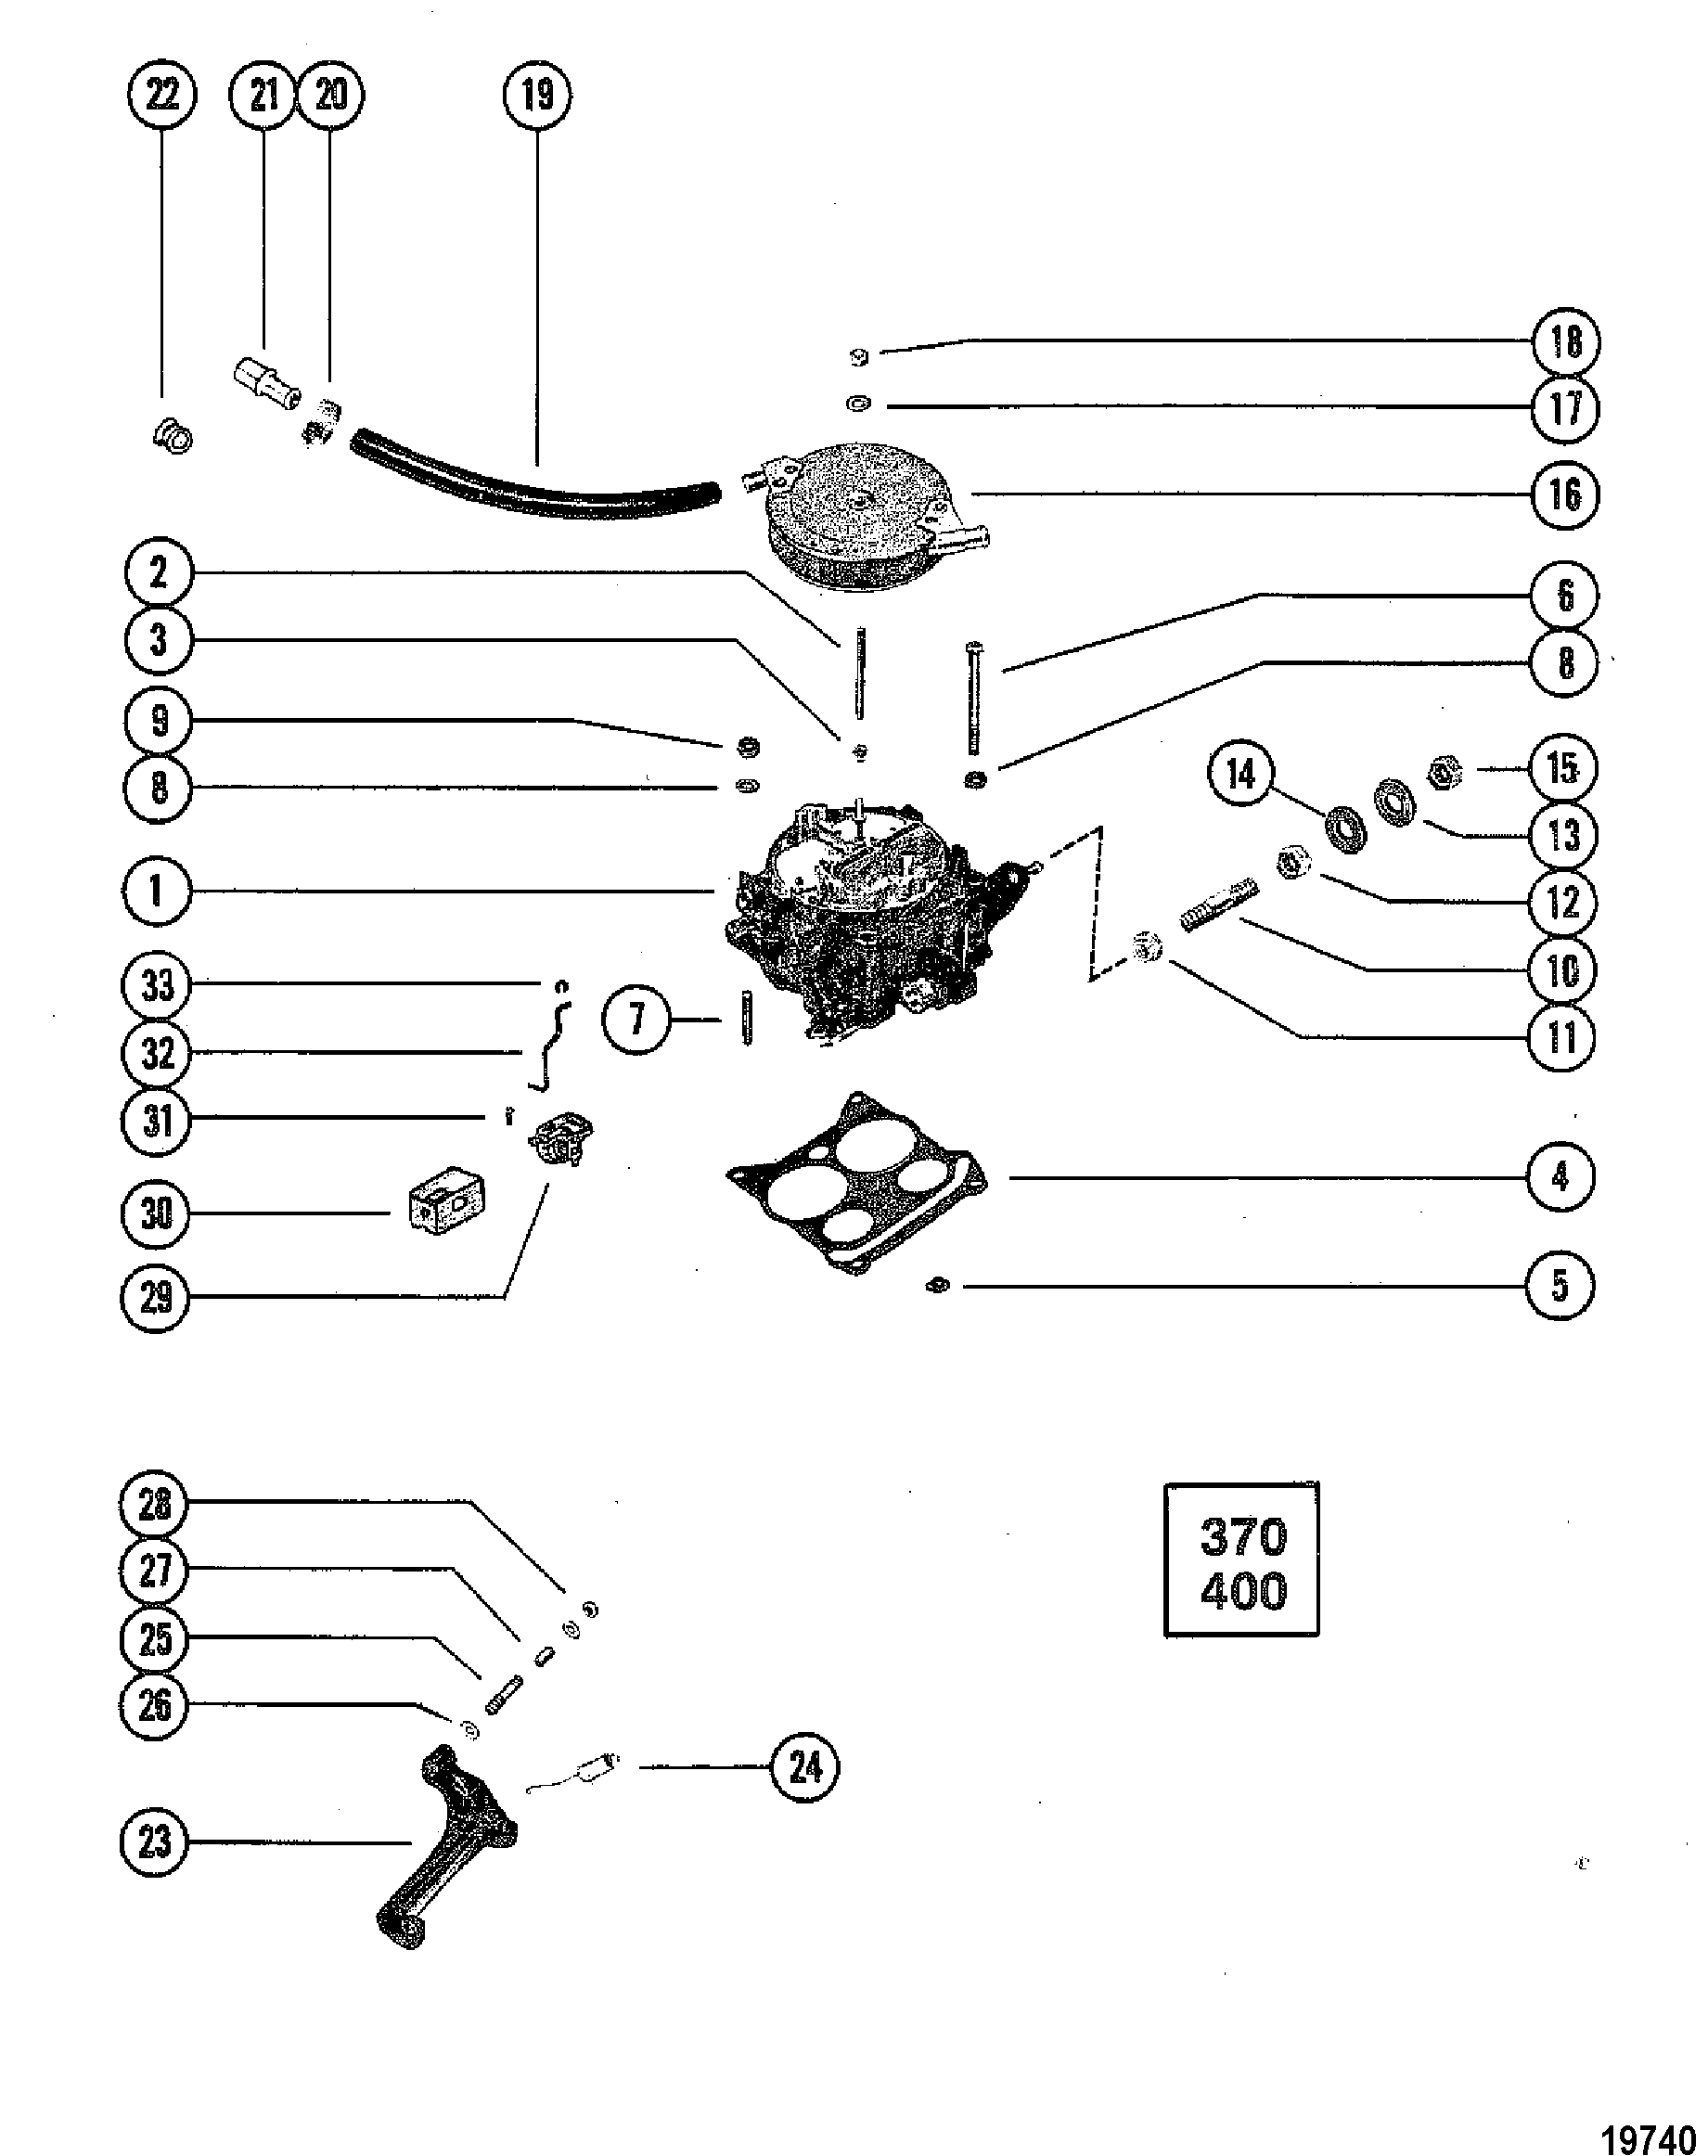 Carburetor and Automatic Choke(370/400)